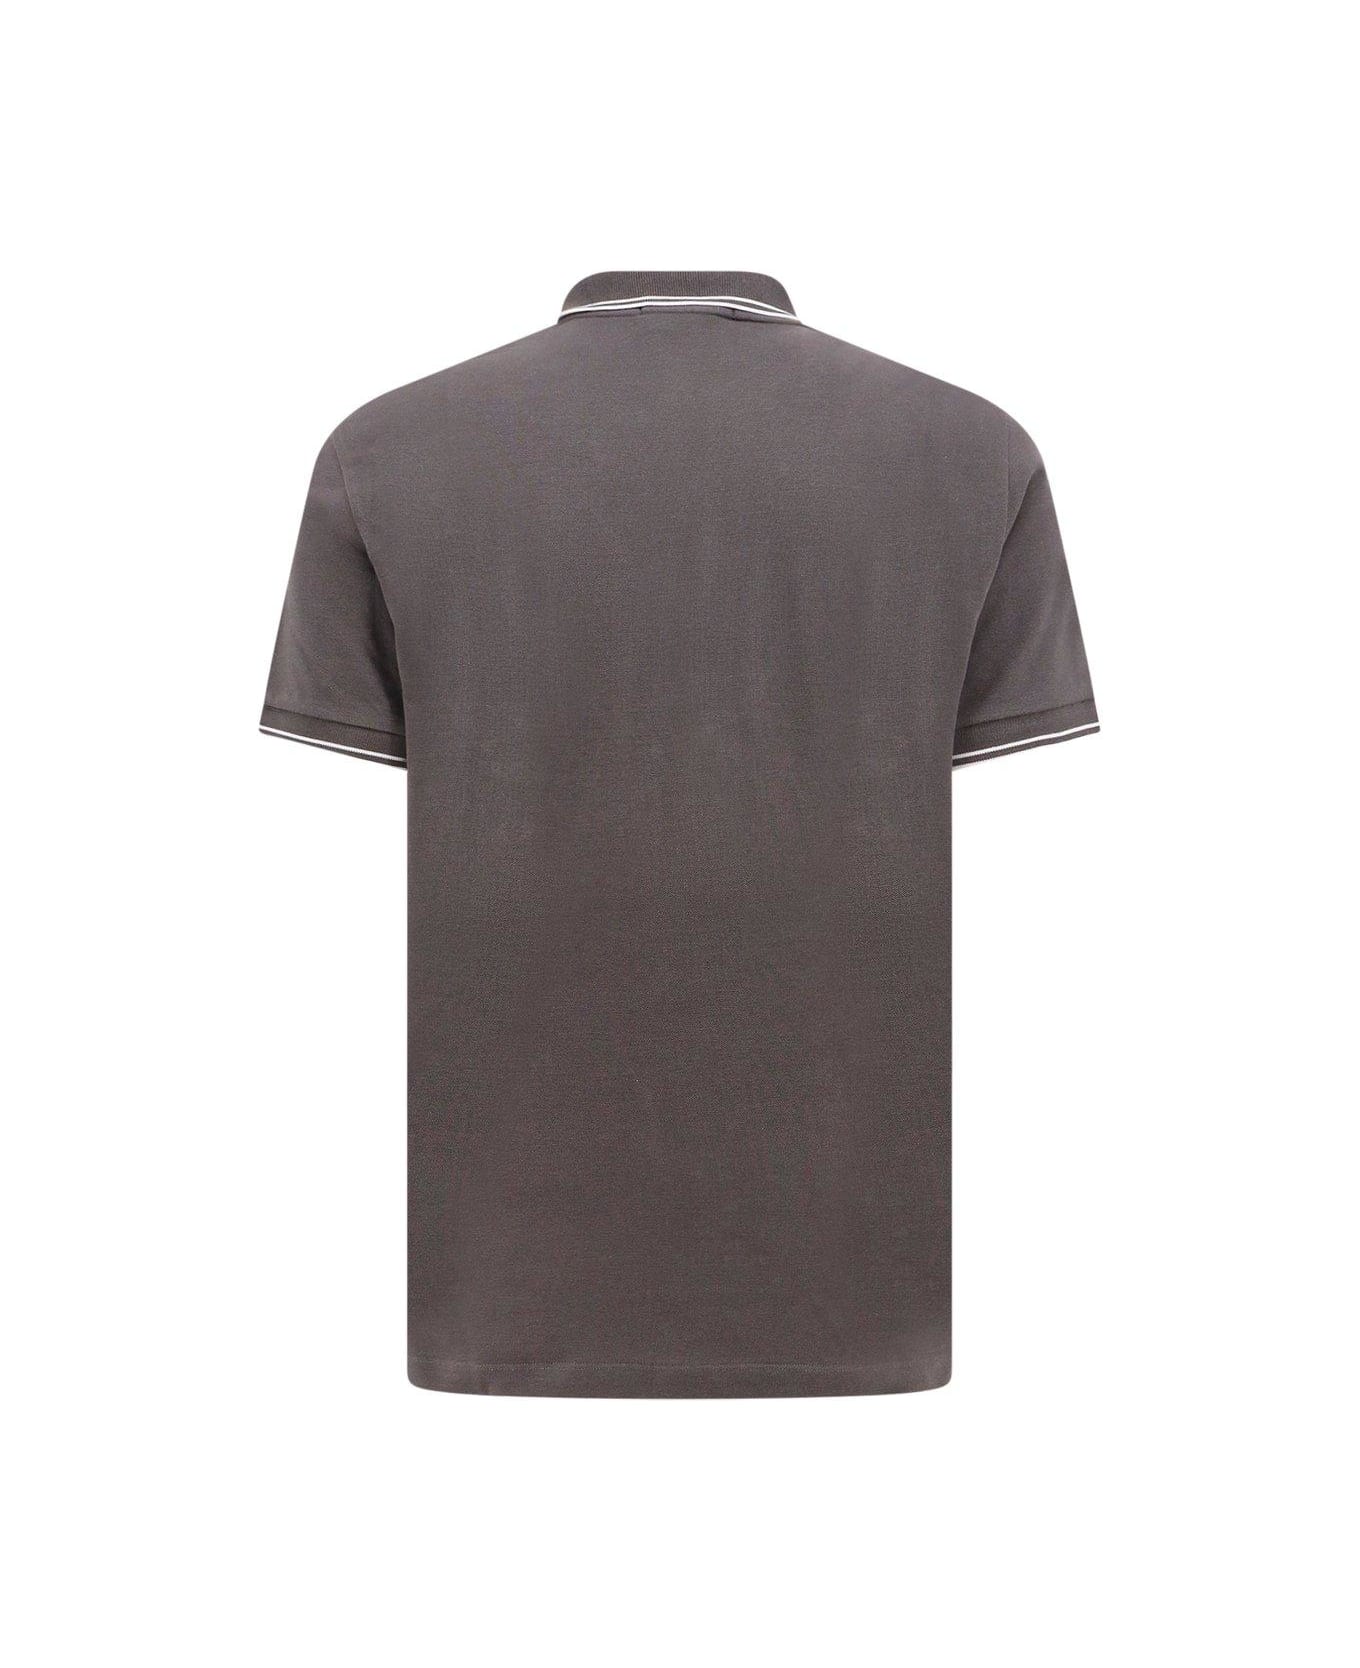 Stone Island Logo Patch Short-sleeved Polo Shirt - Grey